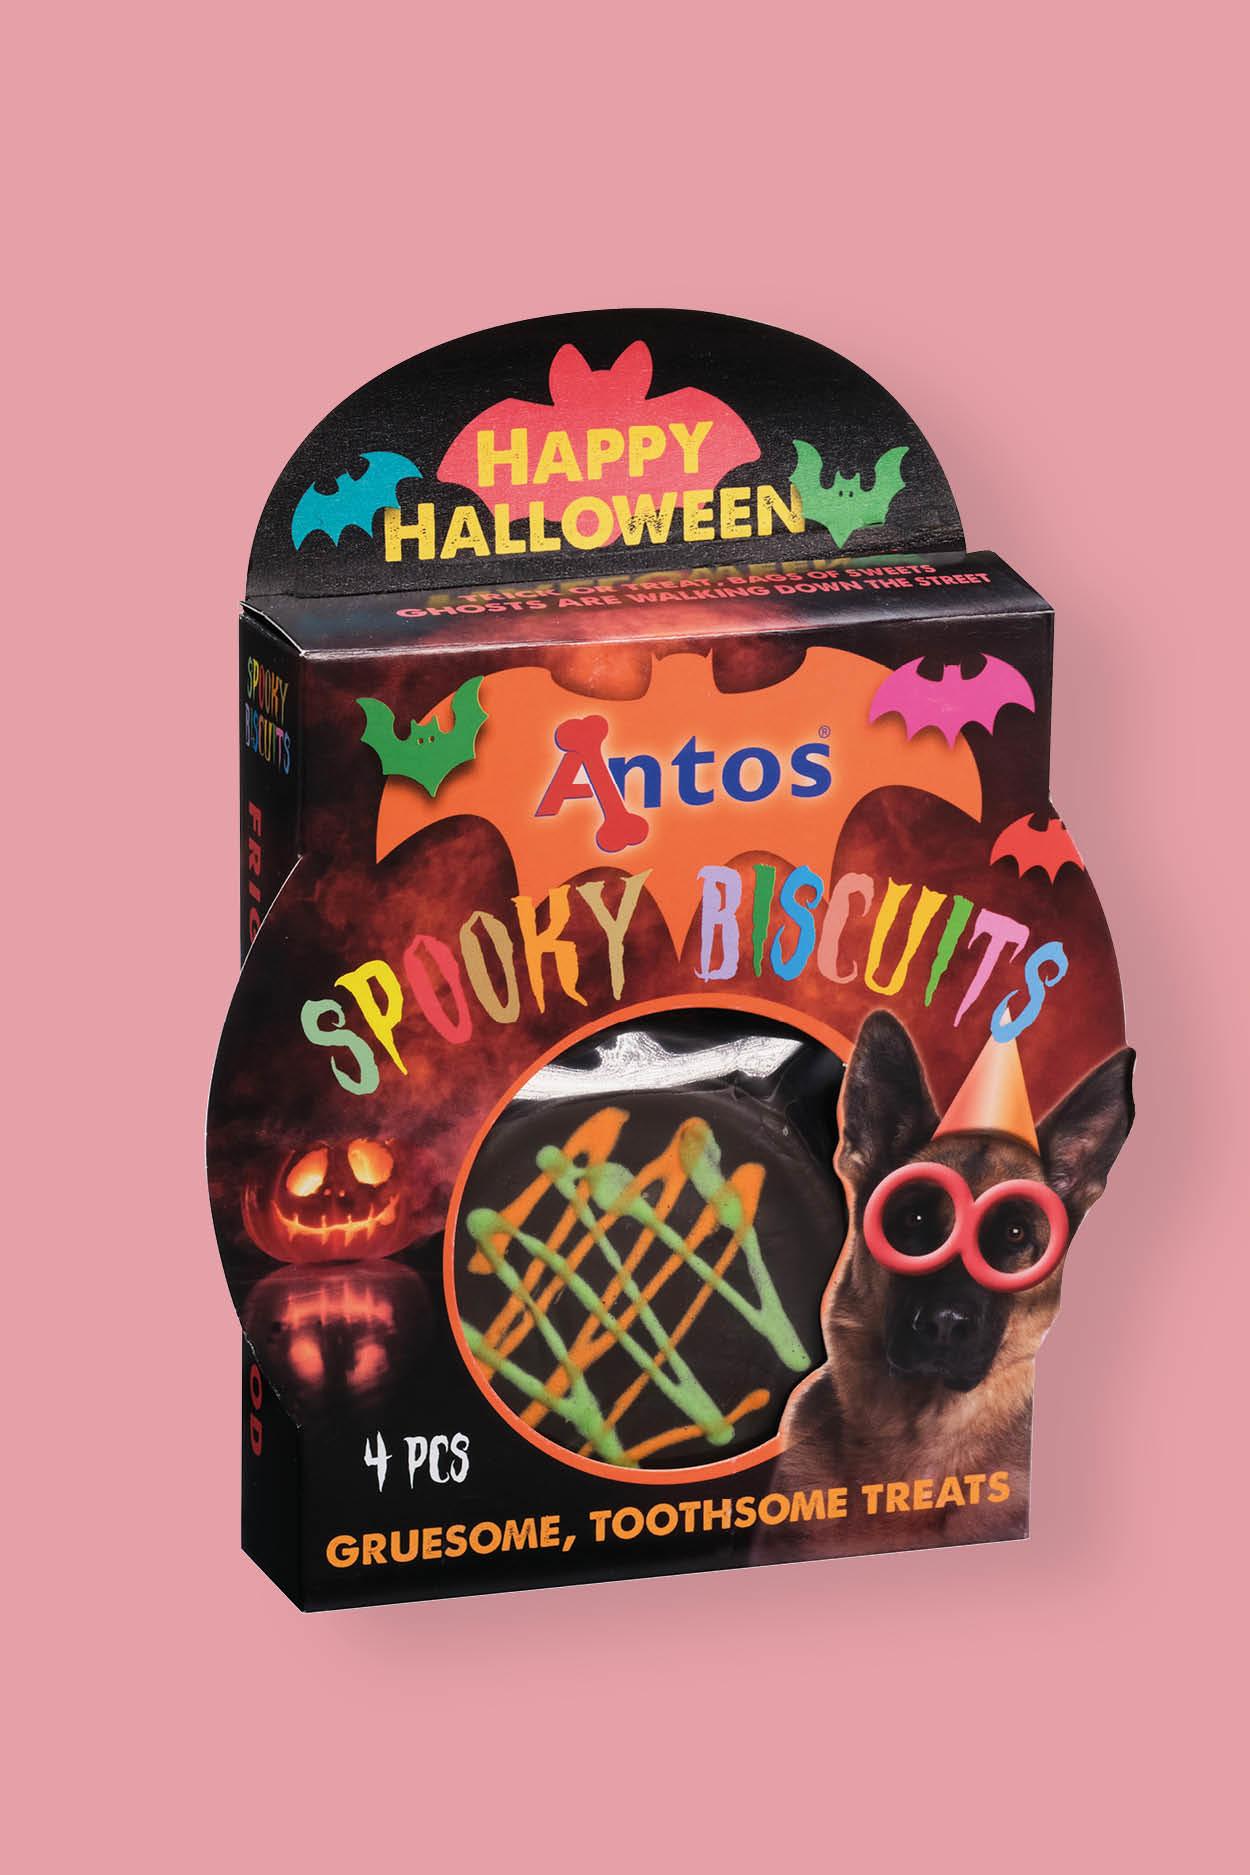 Spooky Biscuits 4 pcs